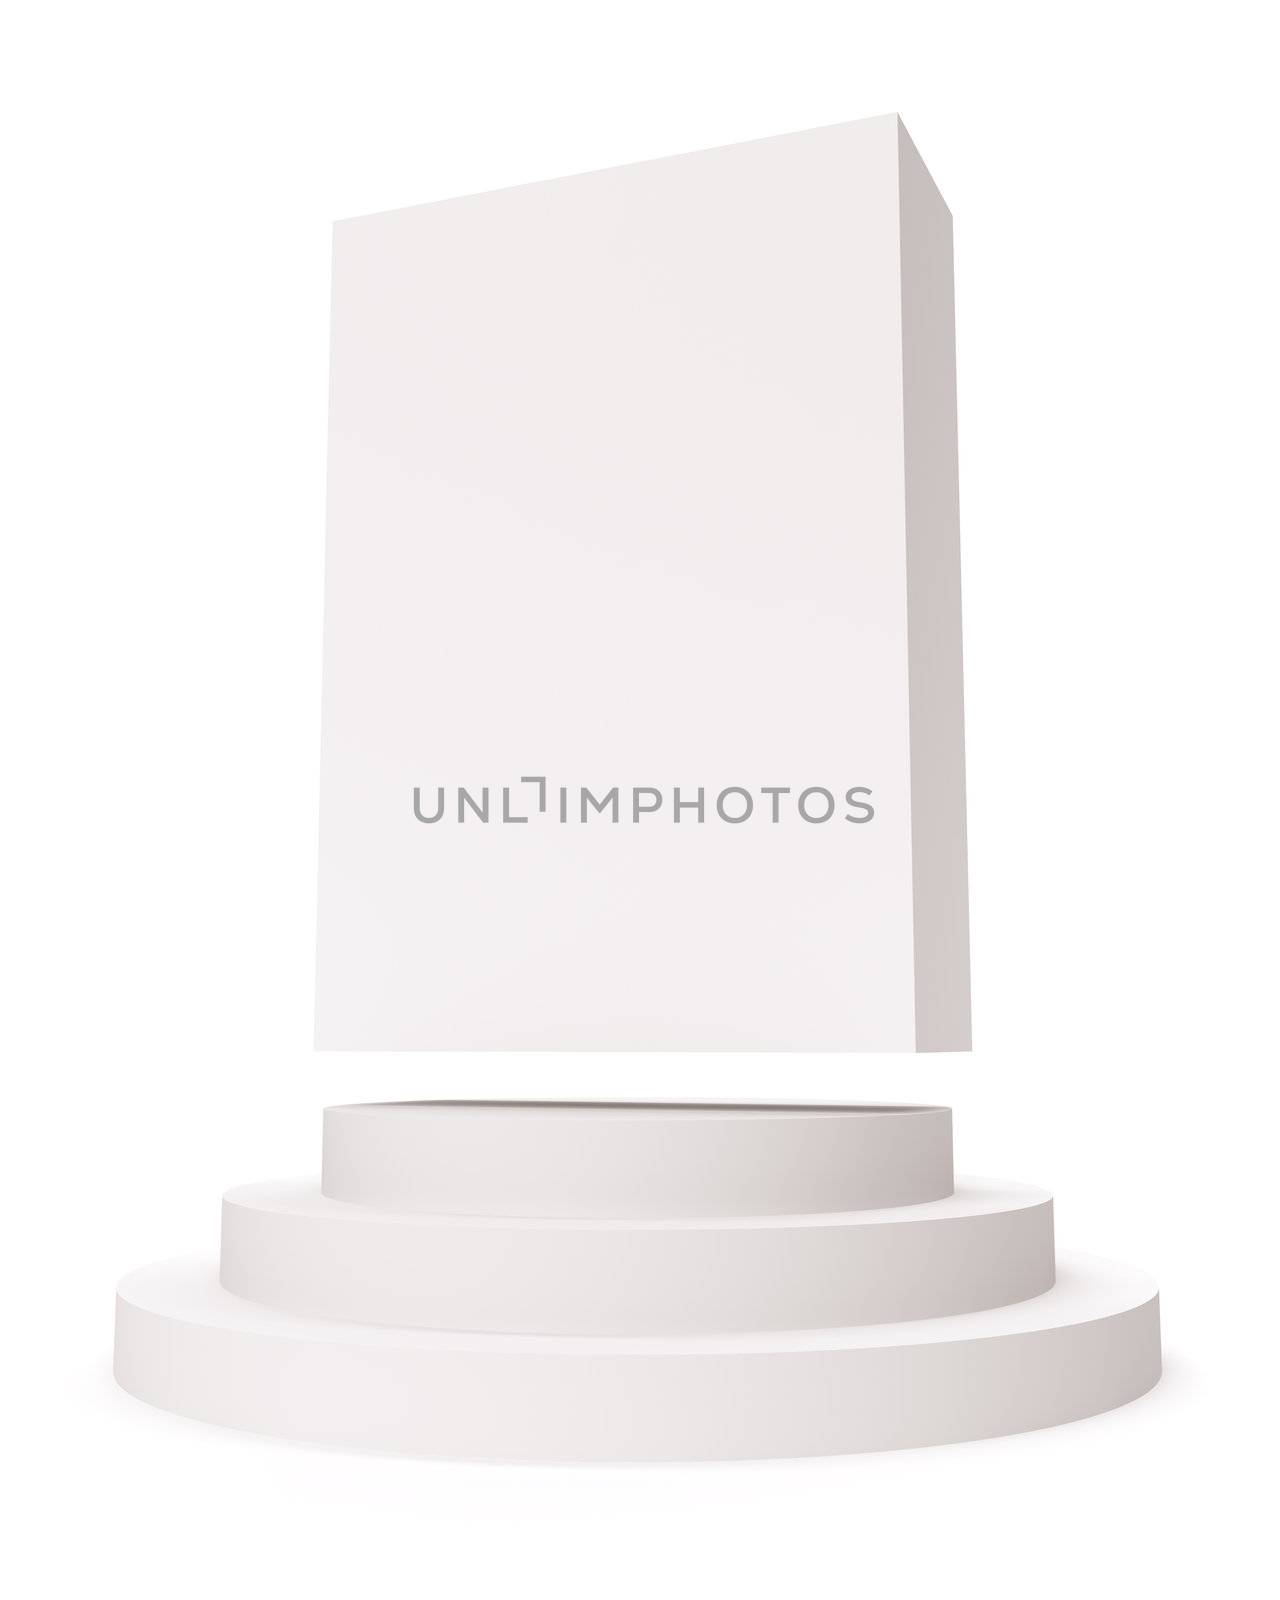 3d Illustration of White Box Isolated on White Background